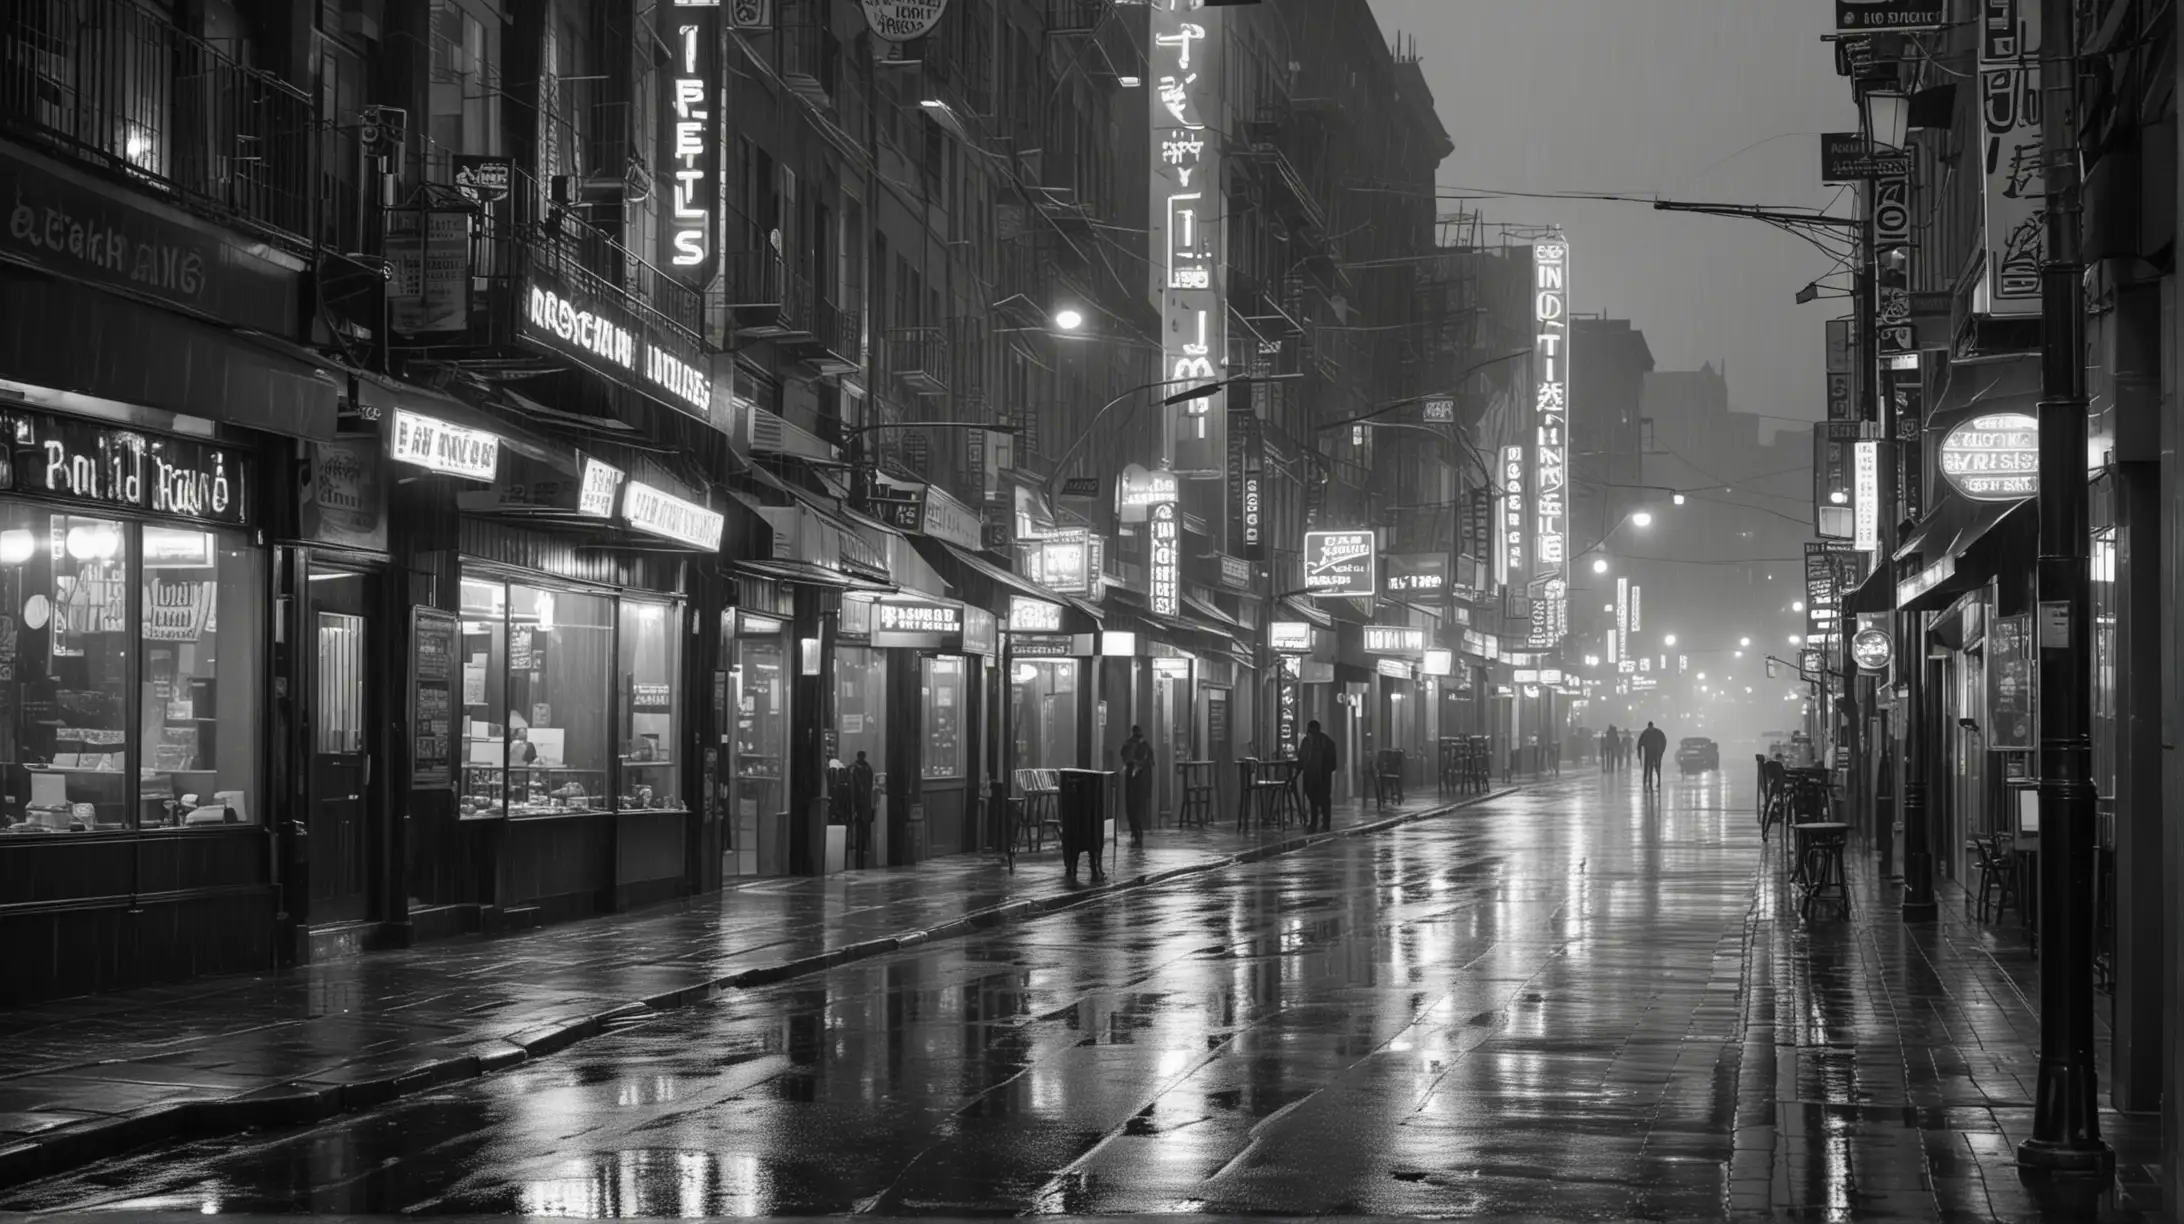 Urban Rainy Night Neonlit City Street in Monochrome